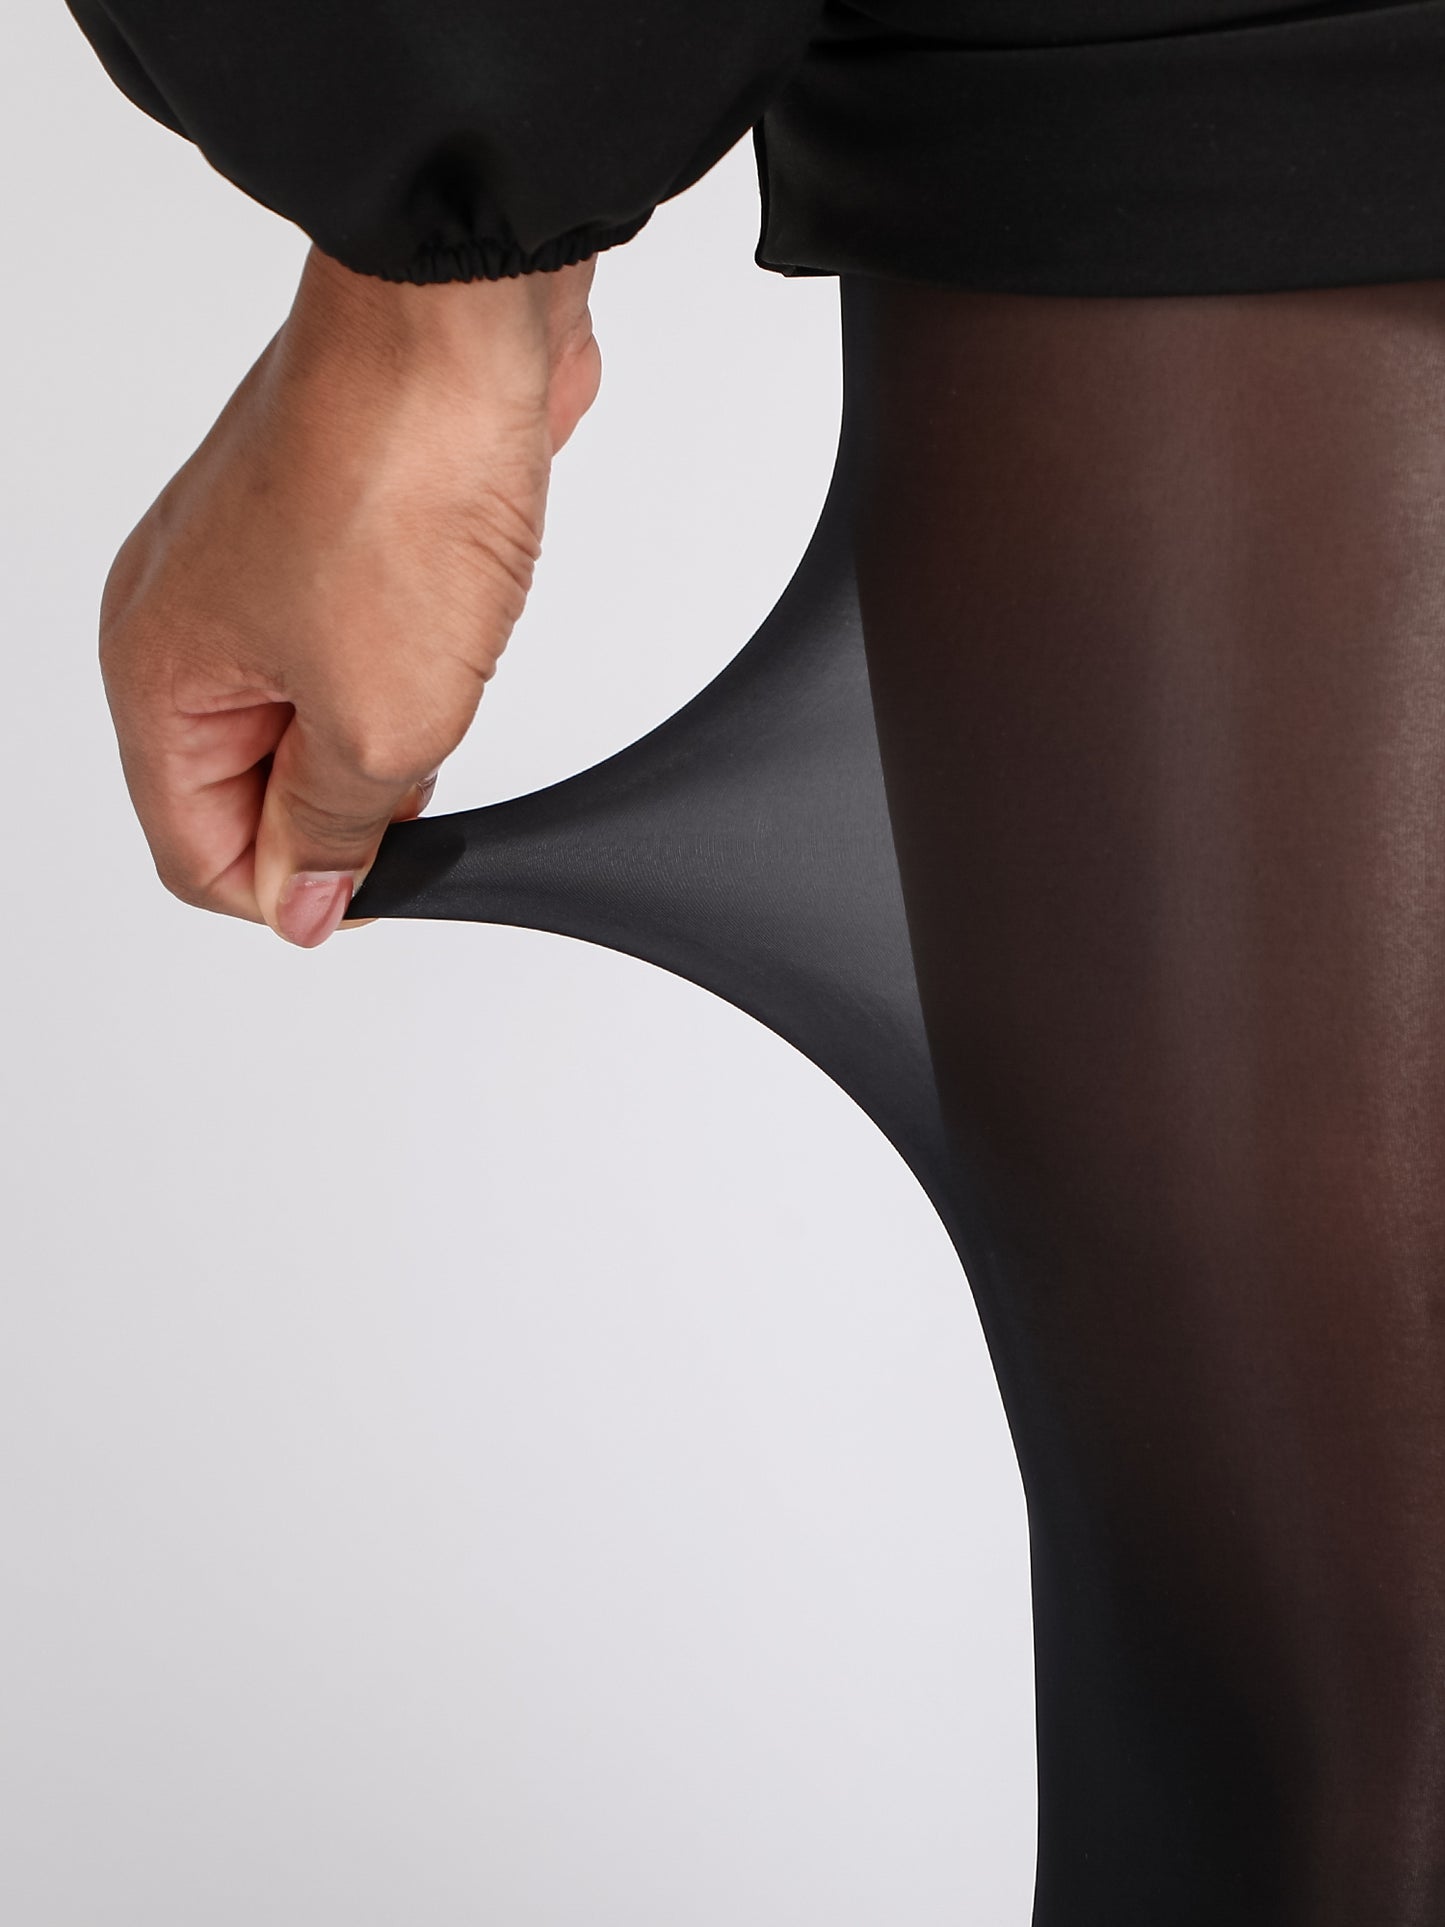 Semi-Sheer Pantyhose Stockings-Black